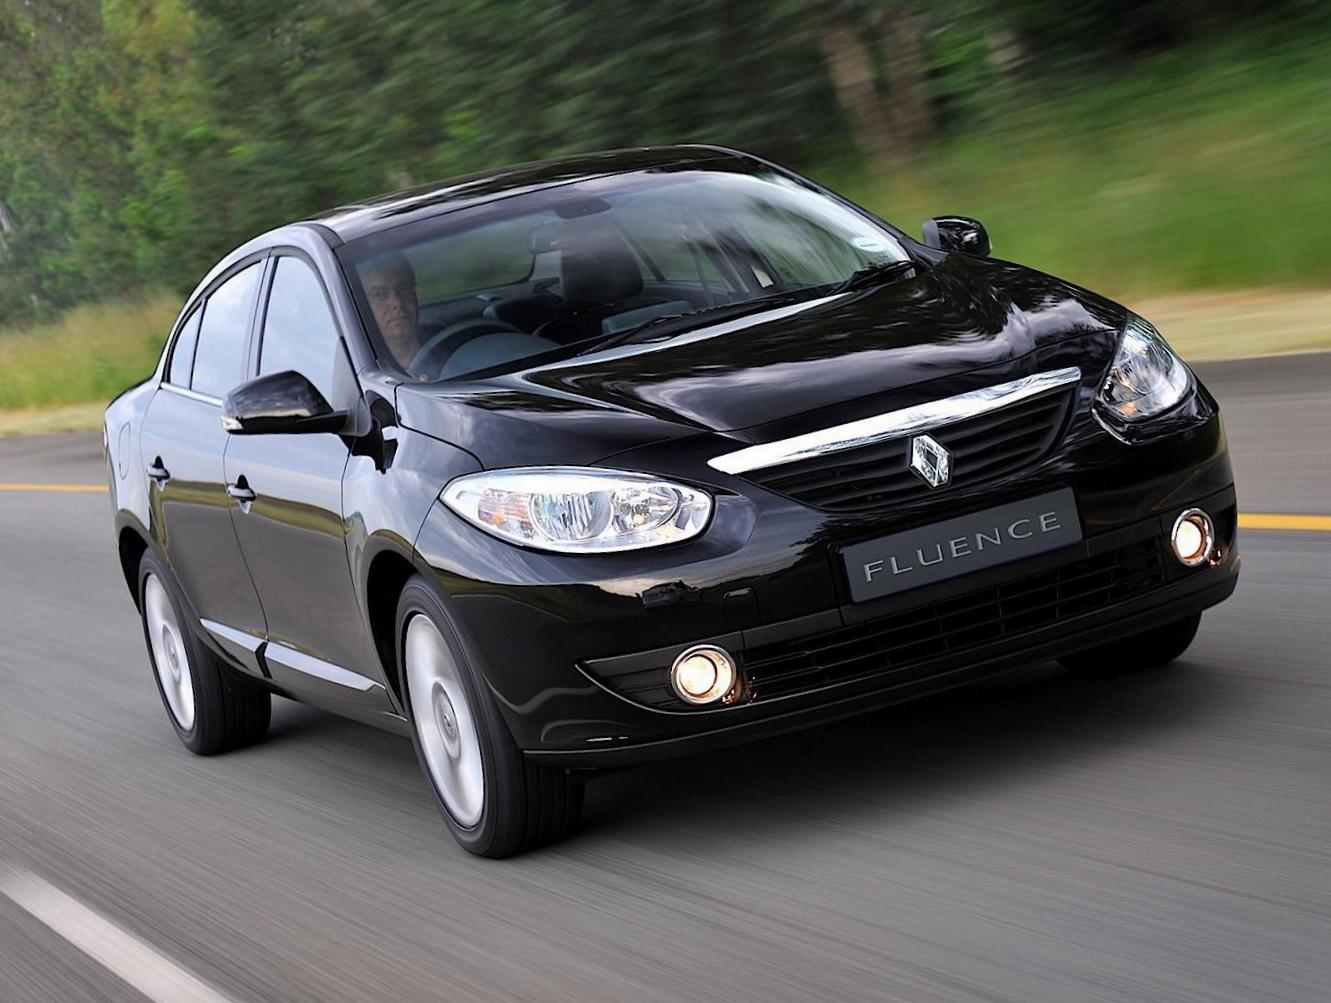 Fluence Renault approved sedan